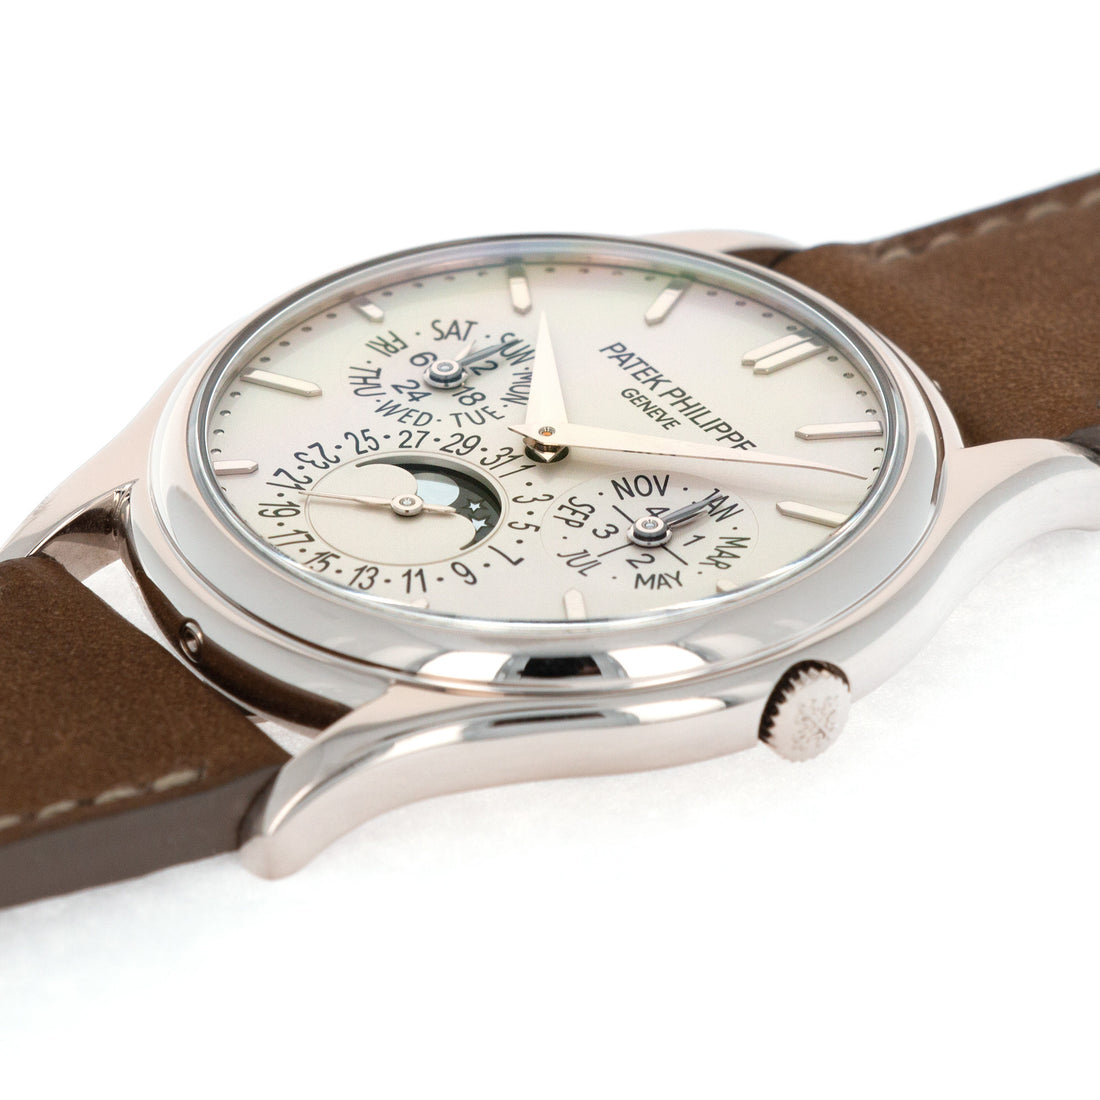 Patek Philippe White Gold Perpetual Calendar Automatic Watch Ref. 5140